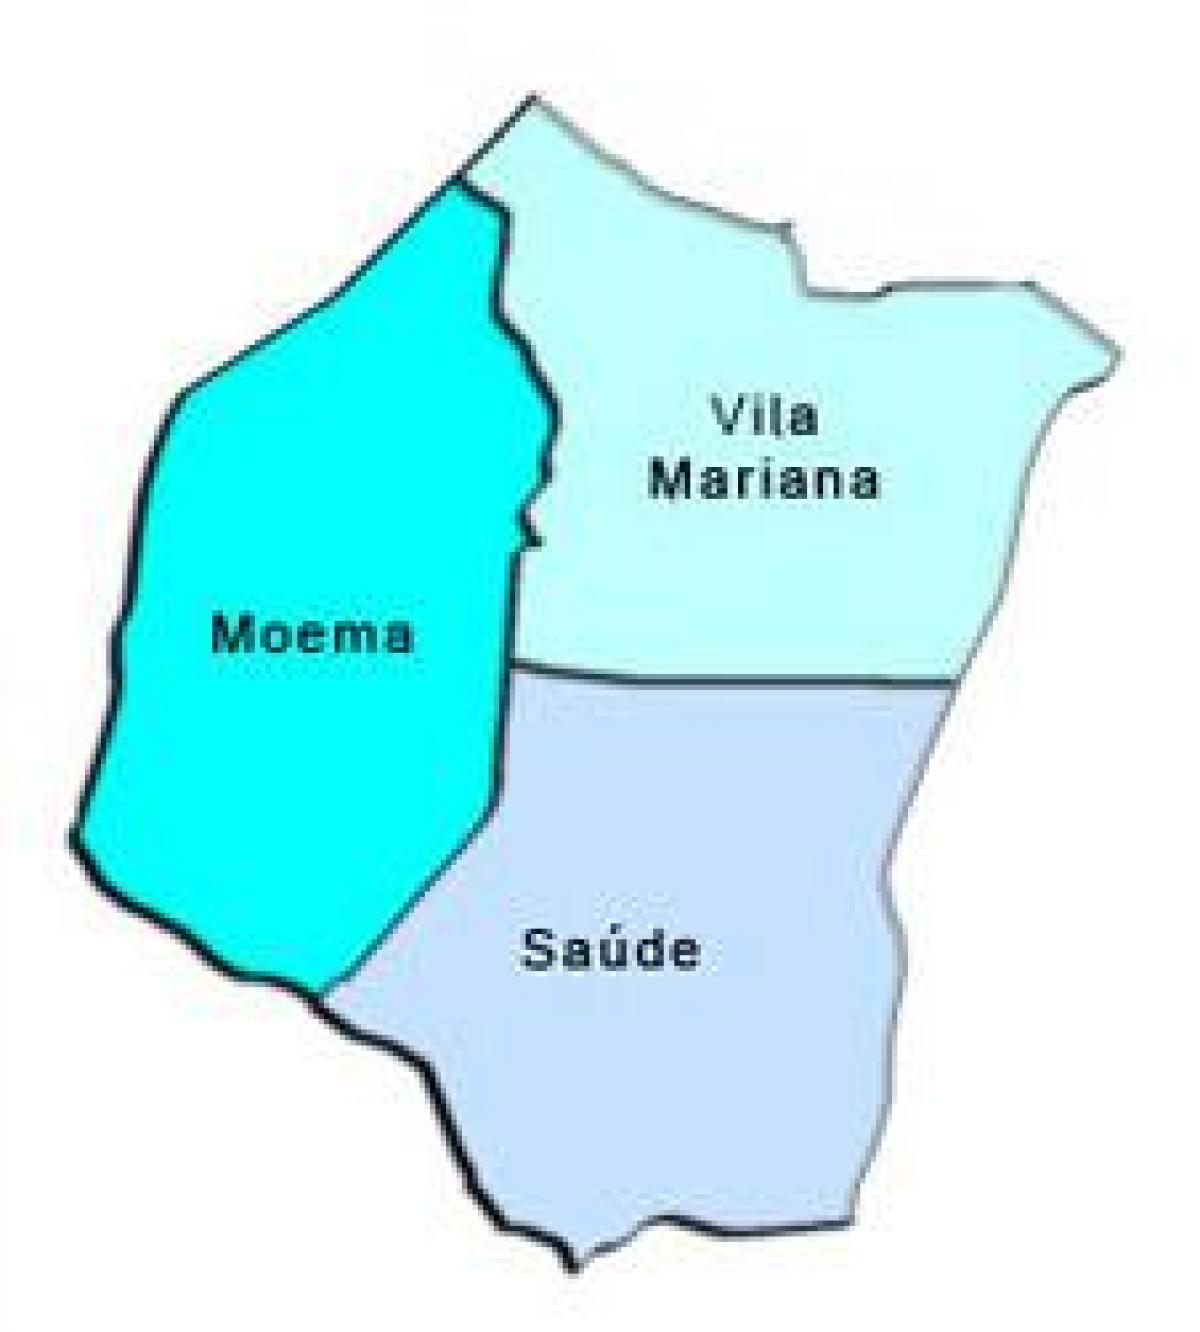 Karta Vila Mariana супрефектур